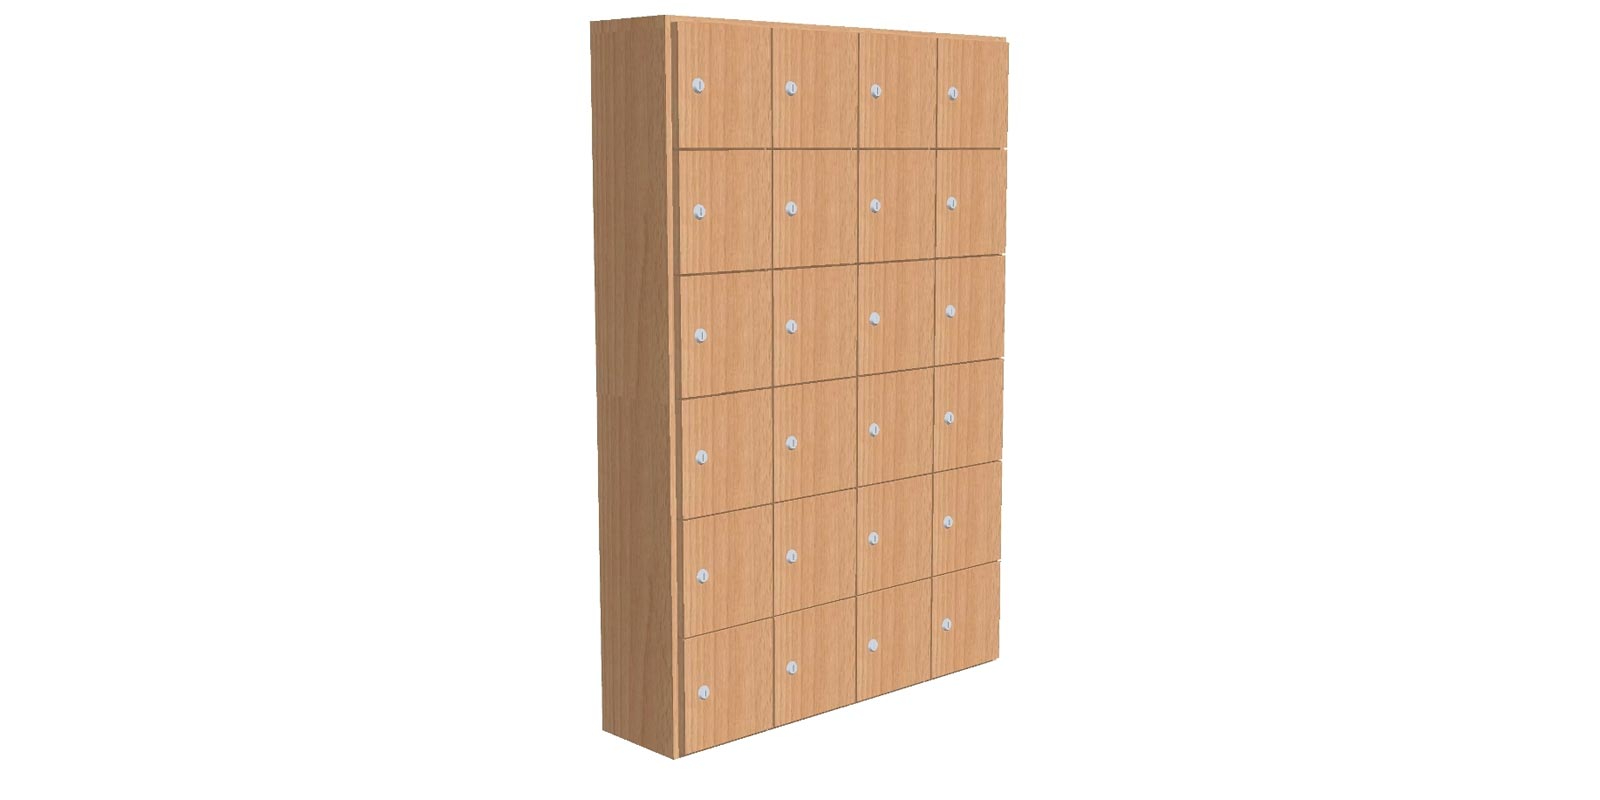 Locker cabinet with 24 mini lockers - WHML02